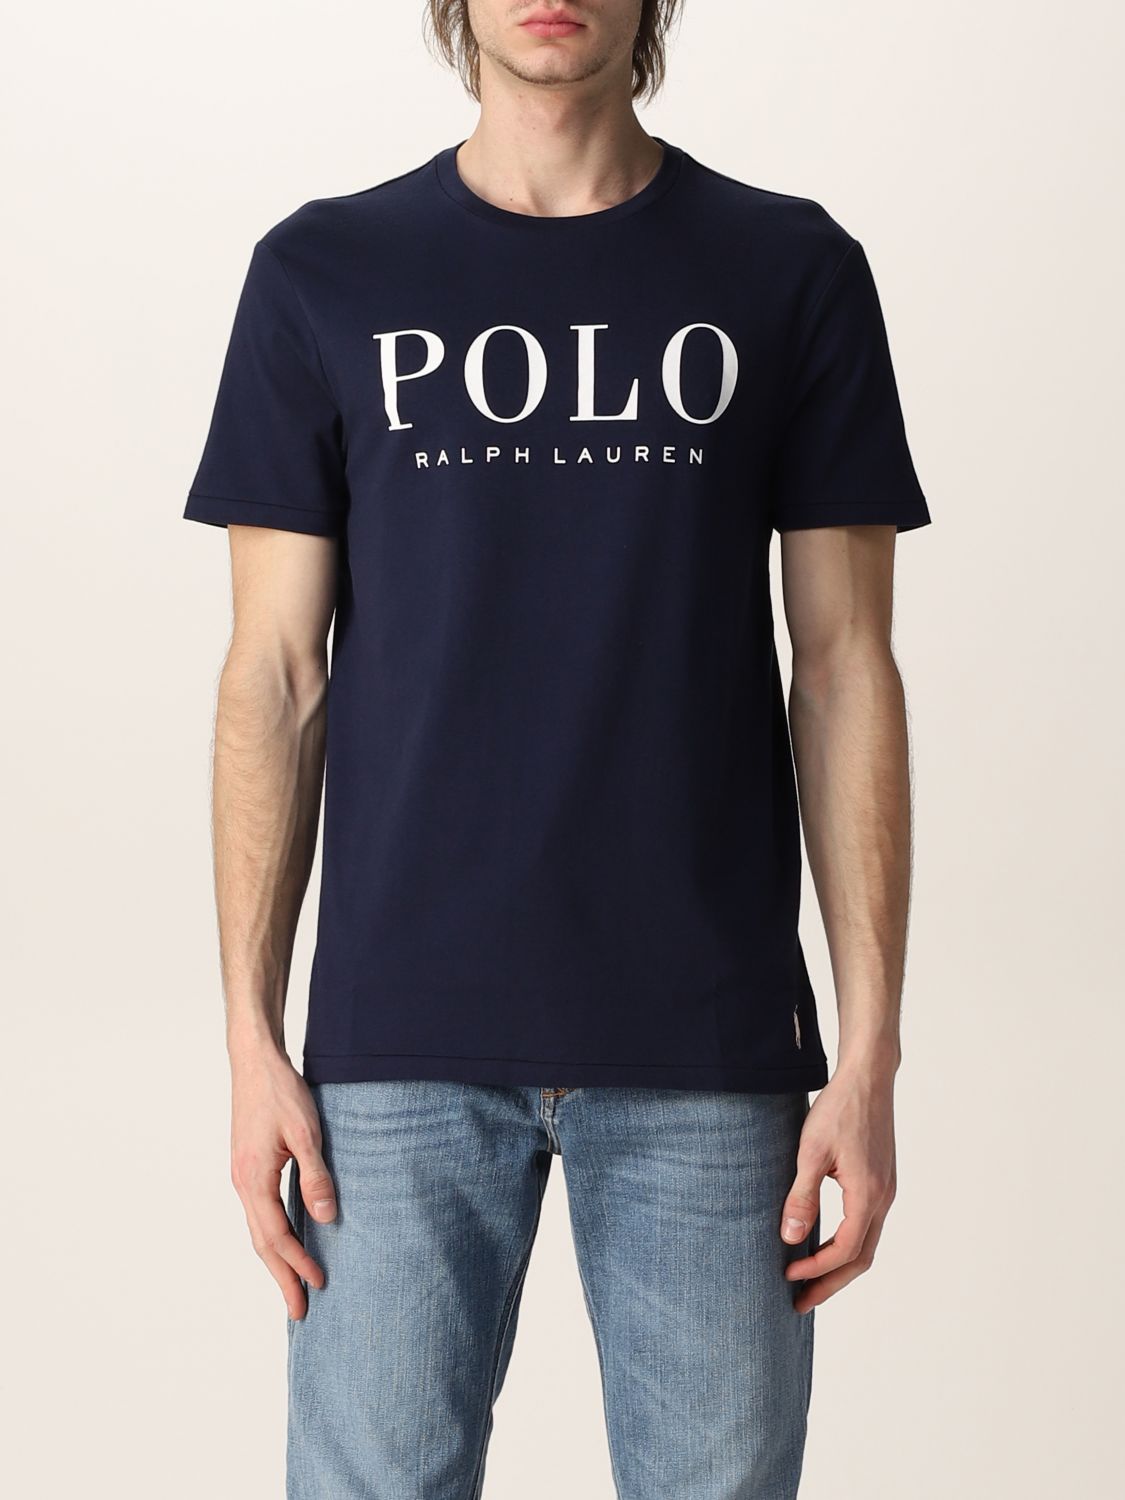 POLO RALPH LAUREN: cotton t-shirt with logo - Navy | Polo Ralph Lauren t- shirt 710860829 online on 